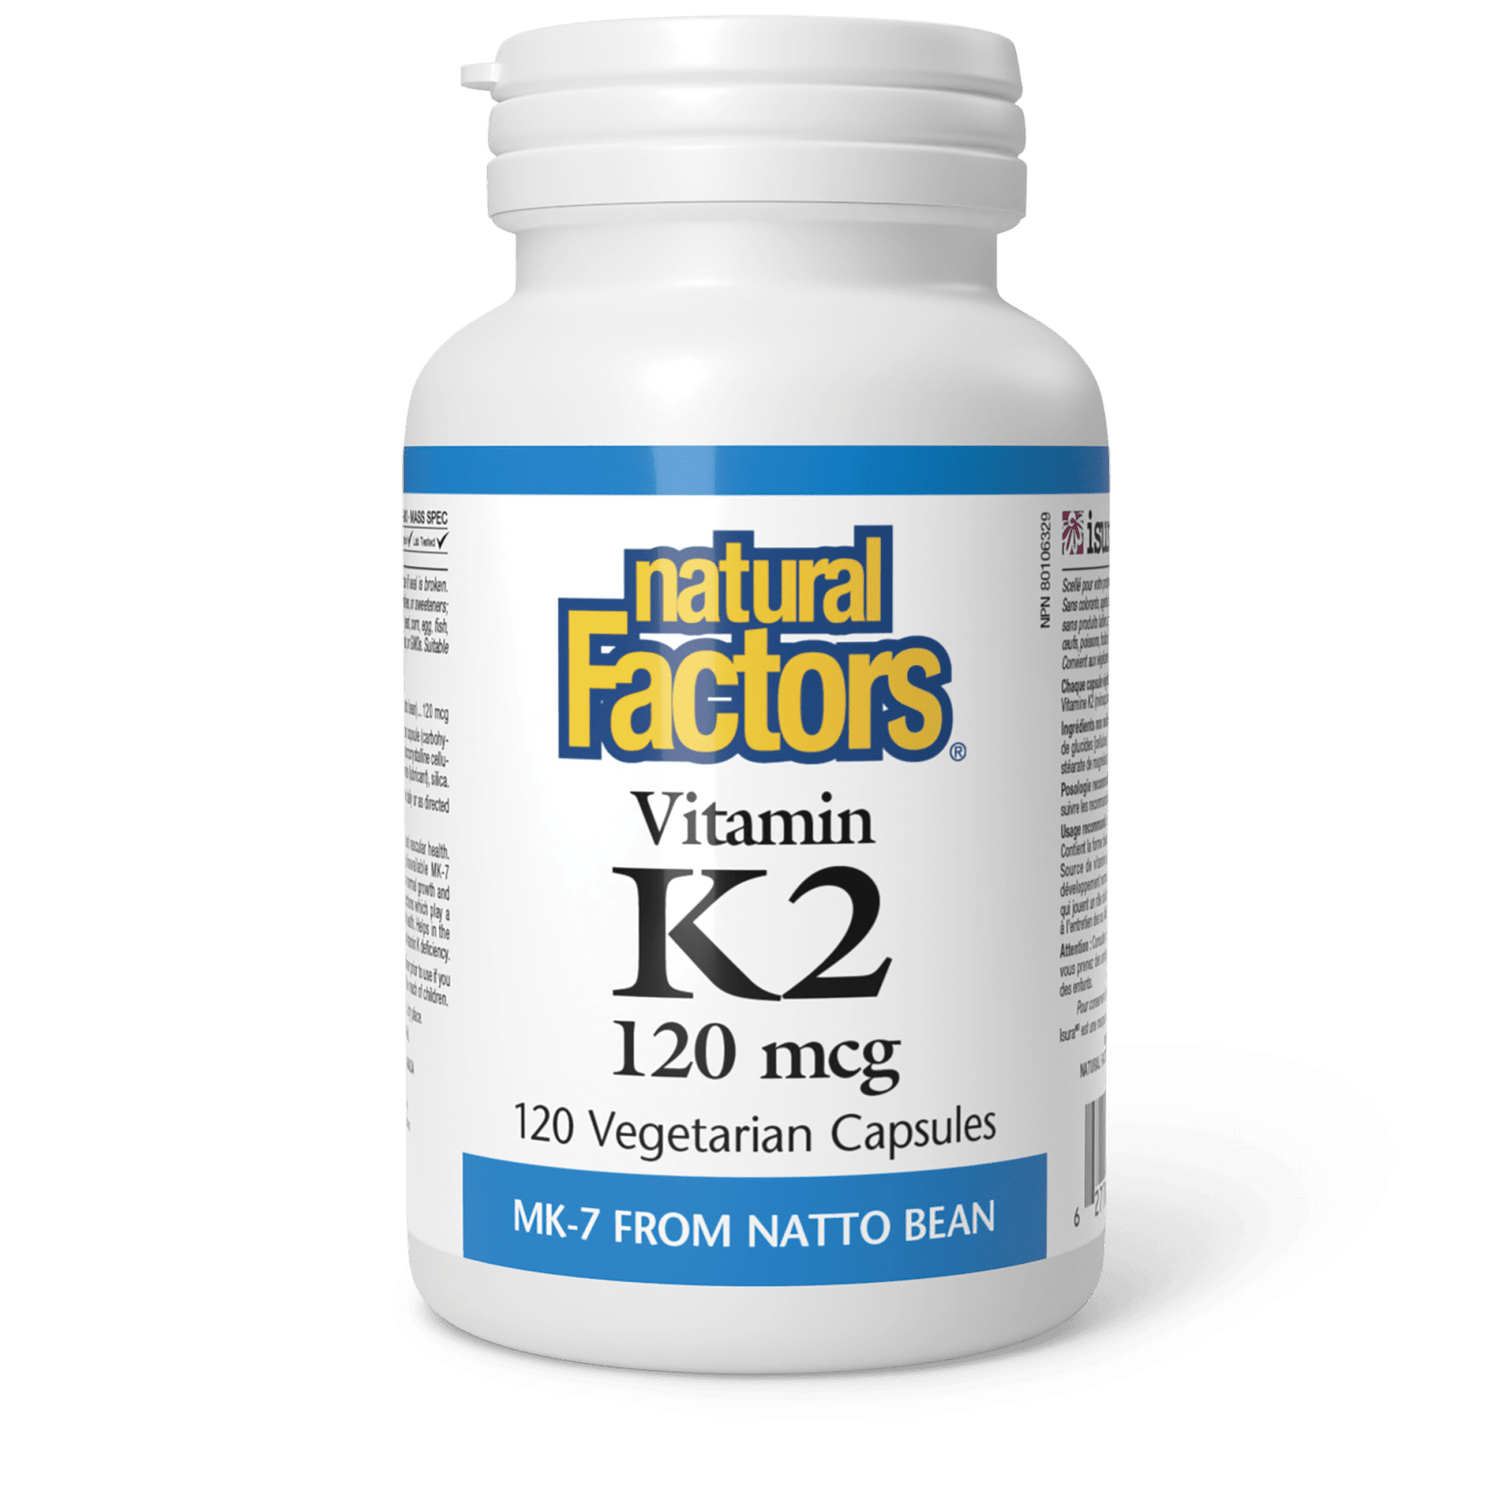 Vitamin K2 120 mcg, Natural Factors|v|image|1297